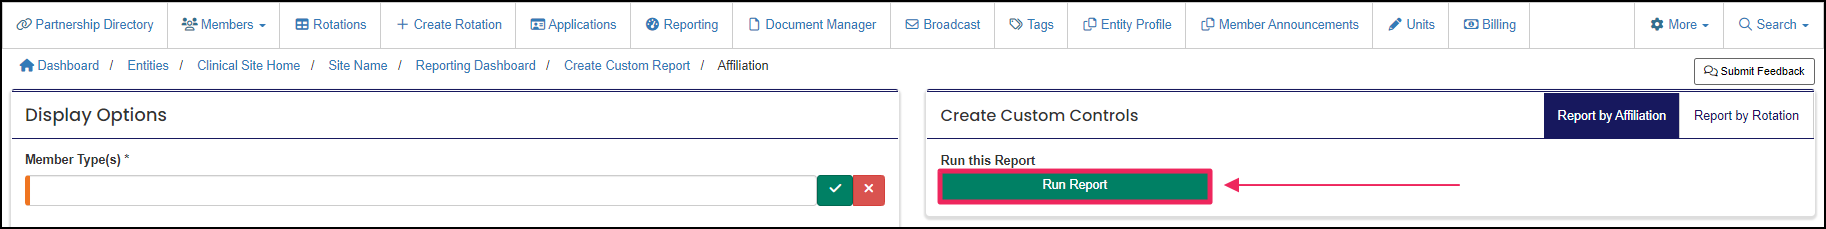 image of Run Report button in the Create Custom Controls panel